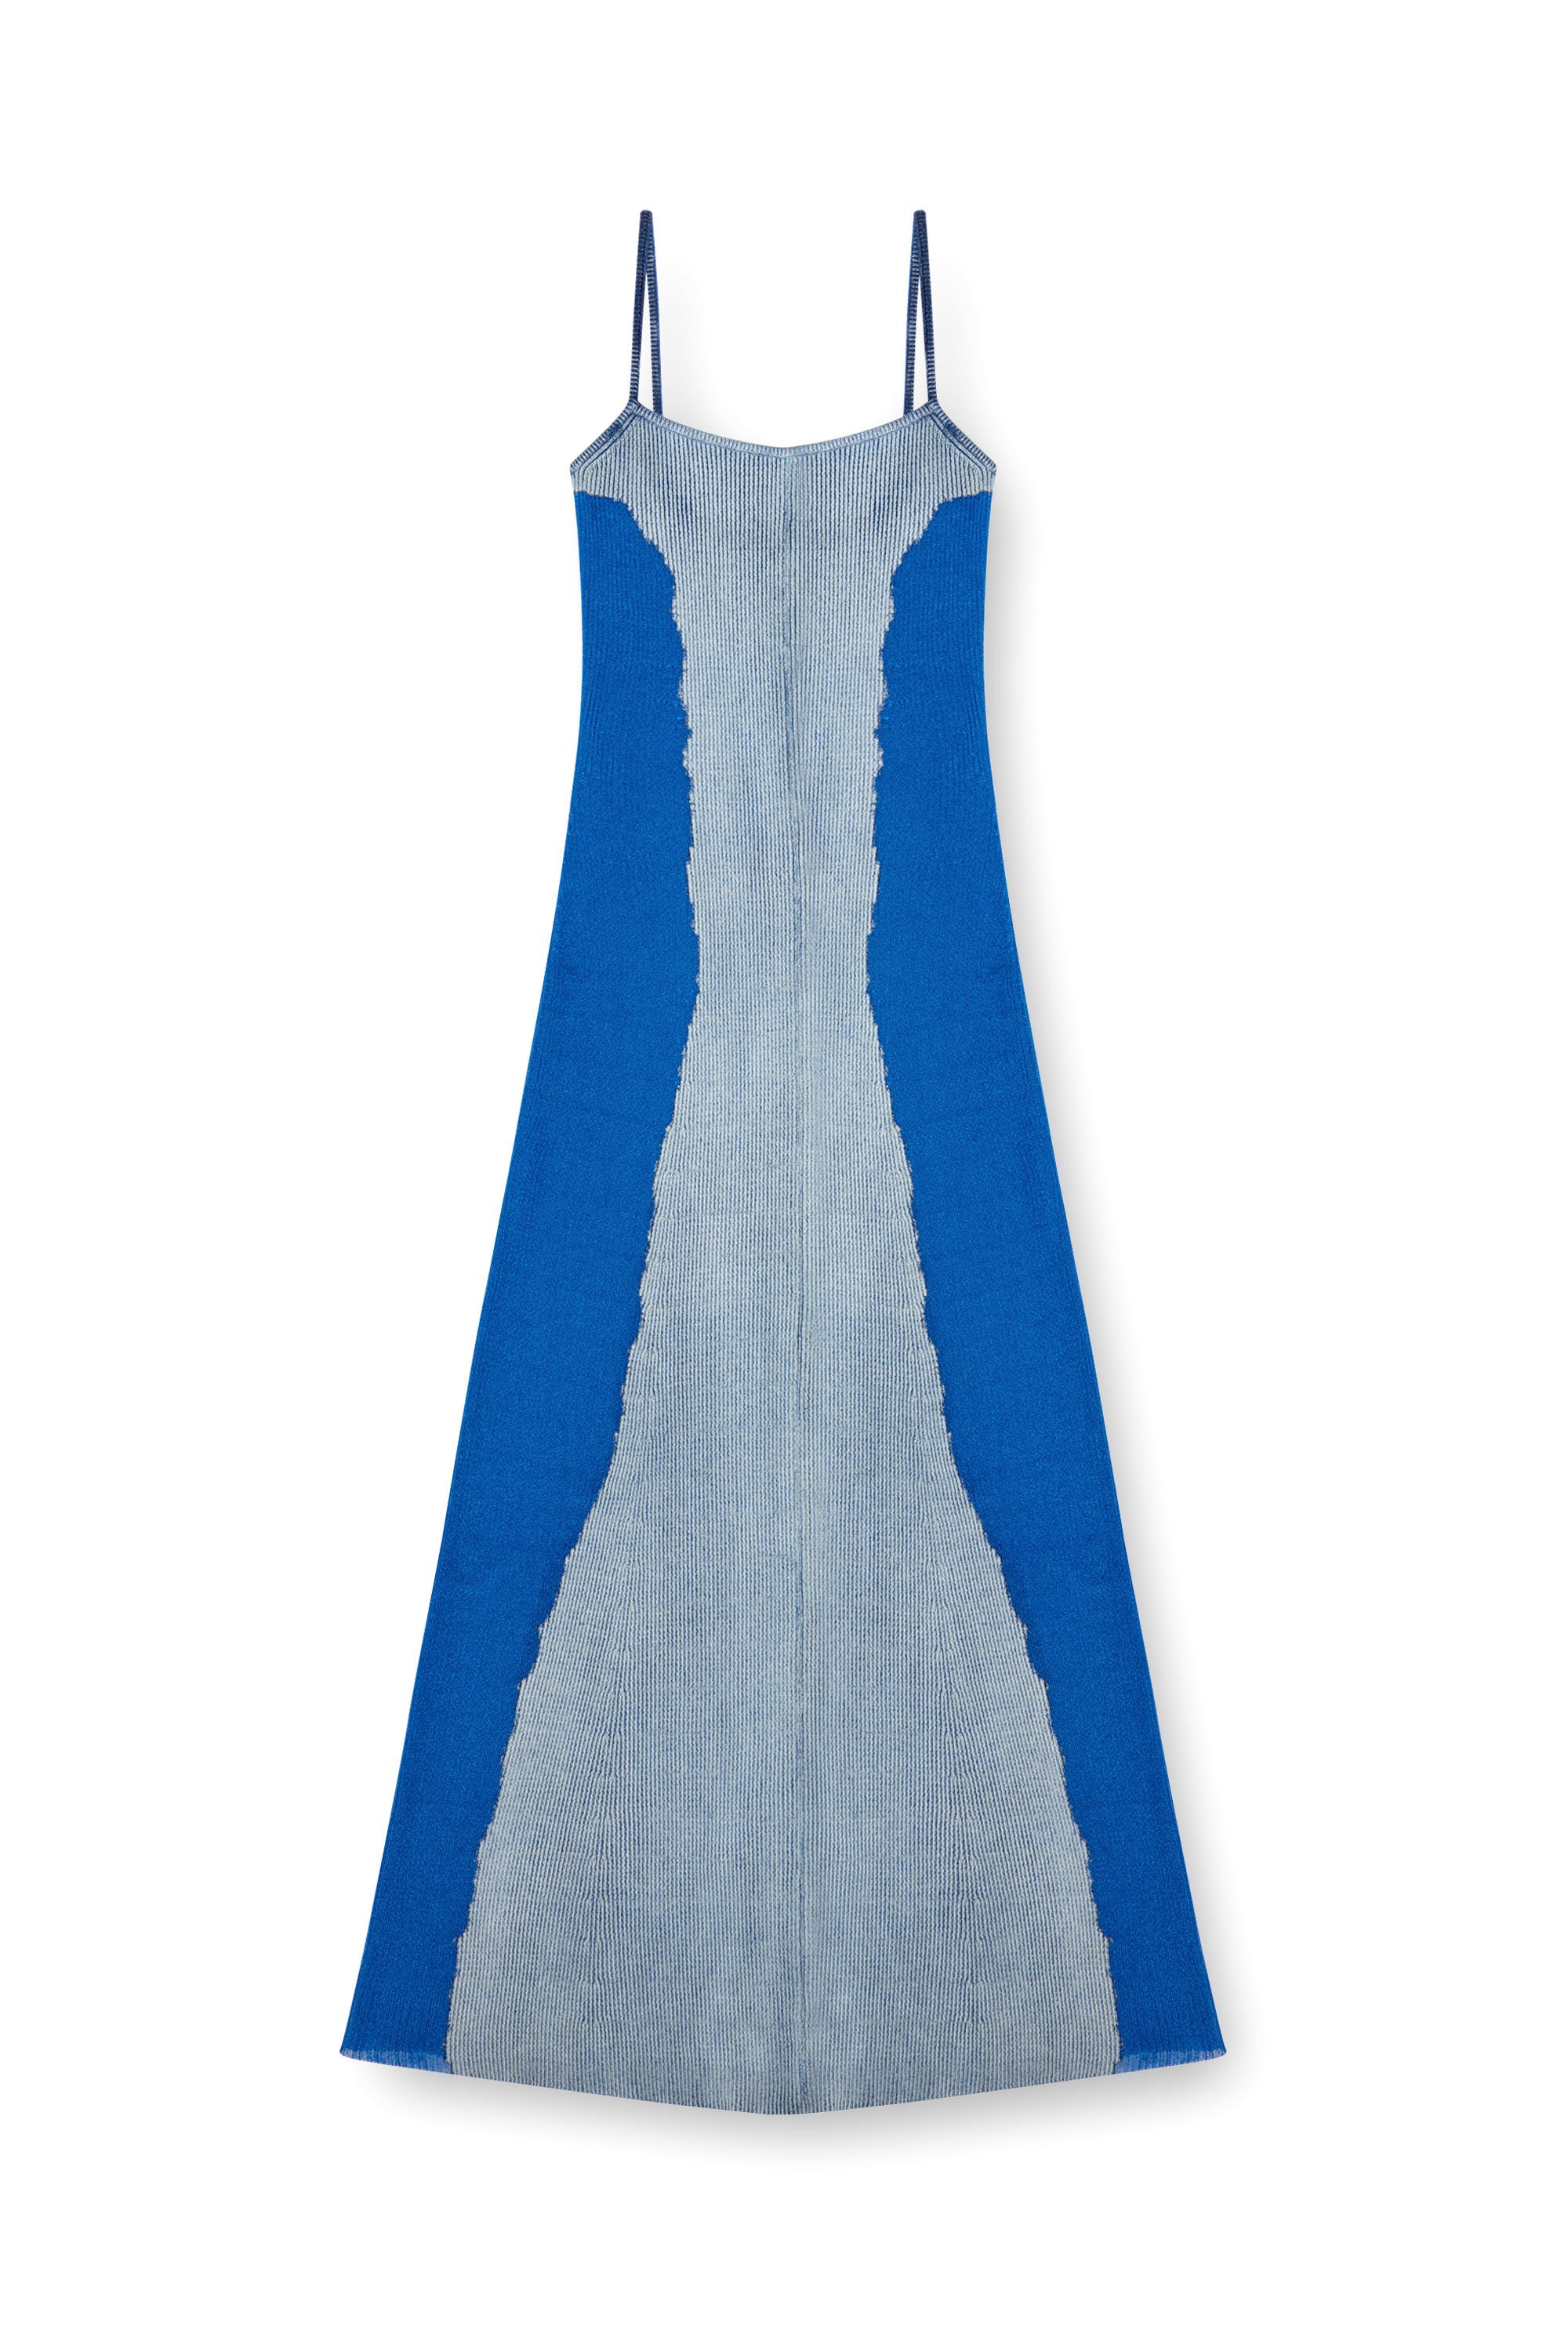 Diesel - M-EDAGLIA, Femme Robe nuisette midi en maille dévorée in Bleu - Image 1